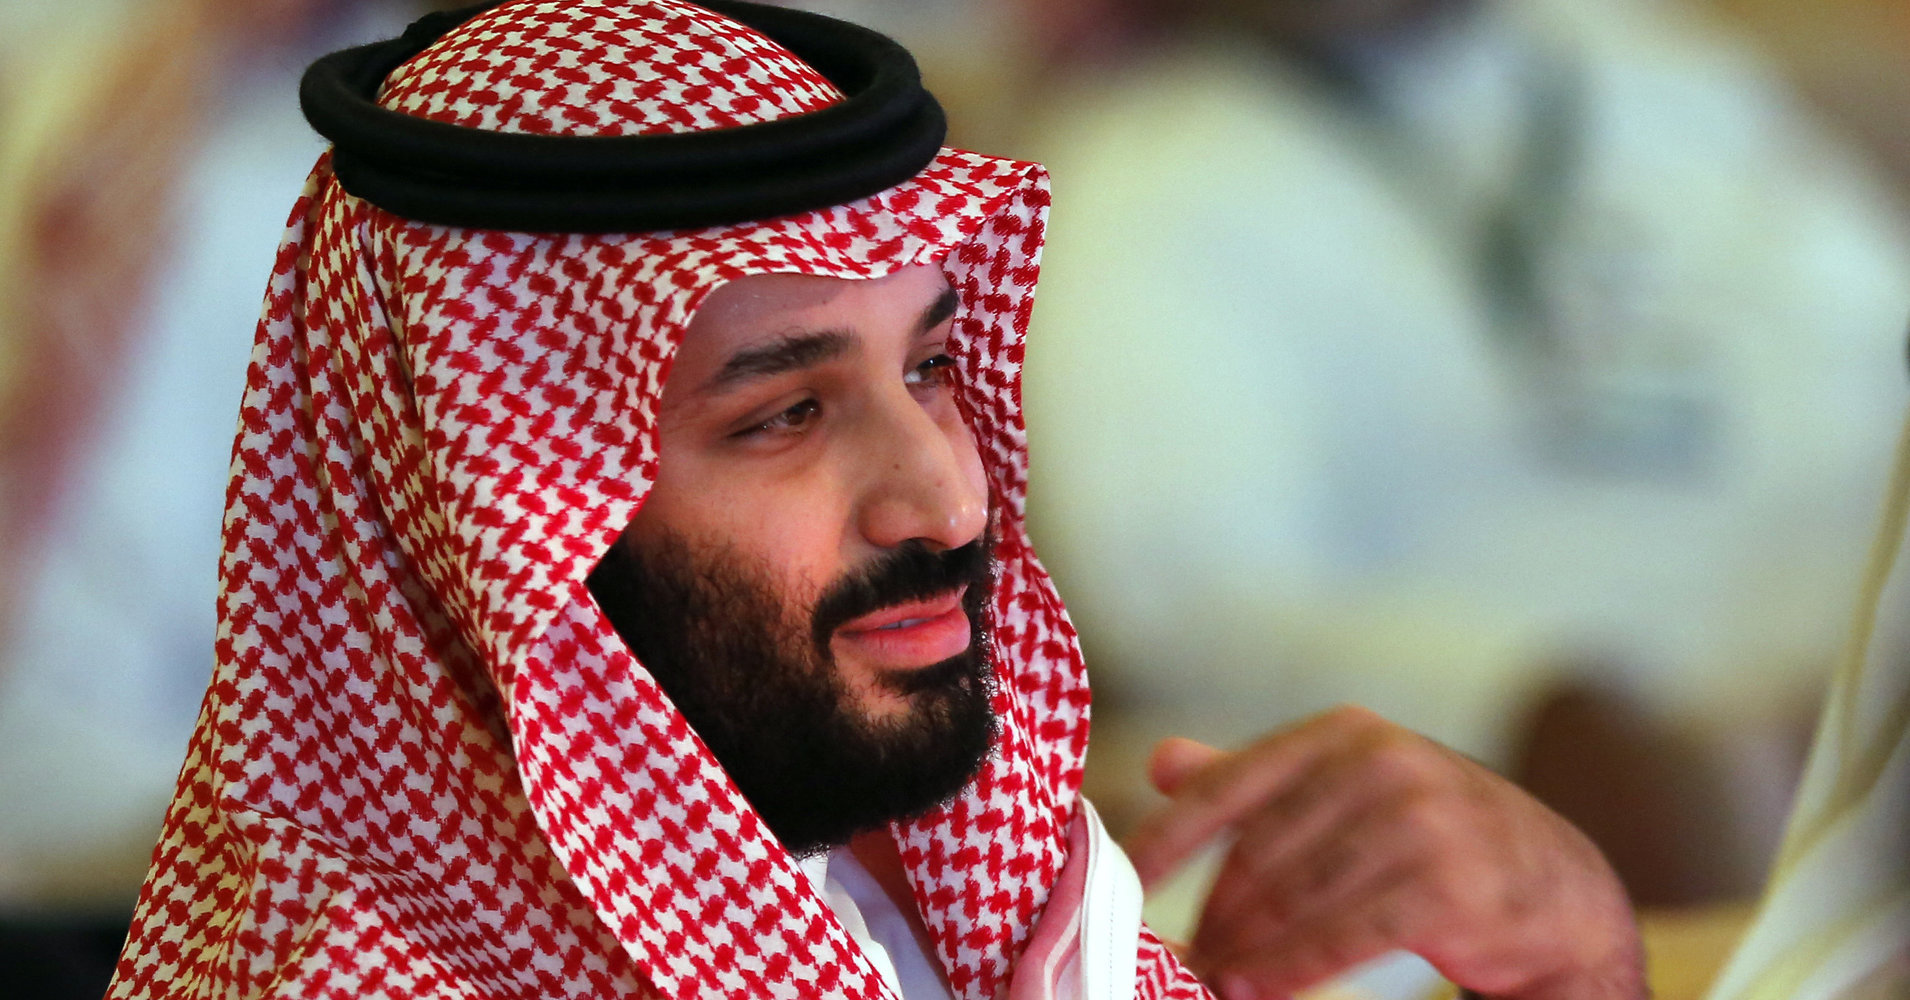 After Khashoggi, Mohammed Bin Salman Looks To Rebuild Image Abroad